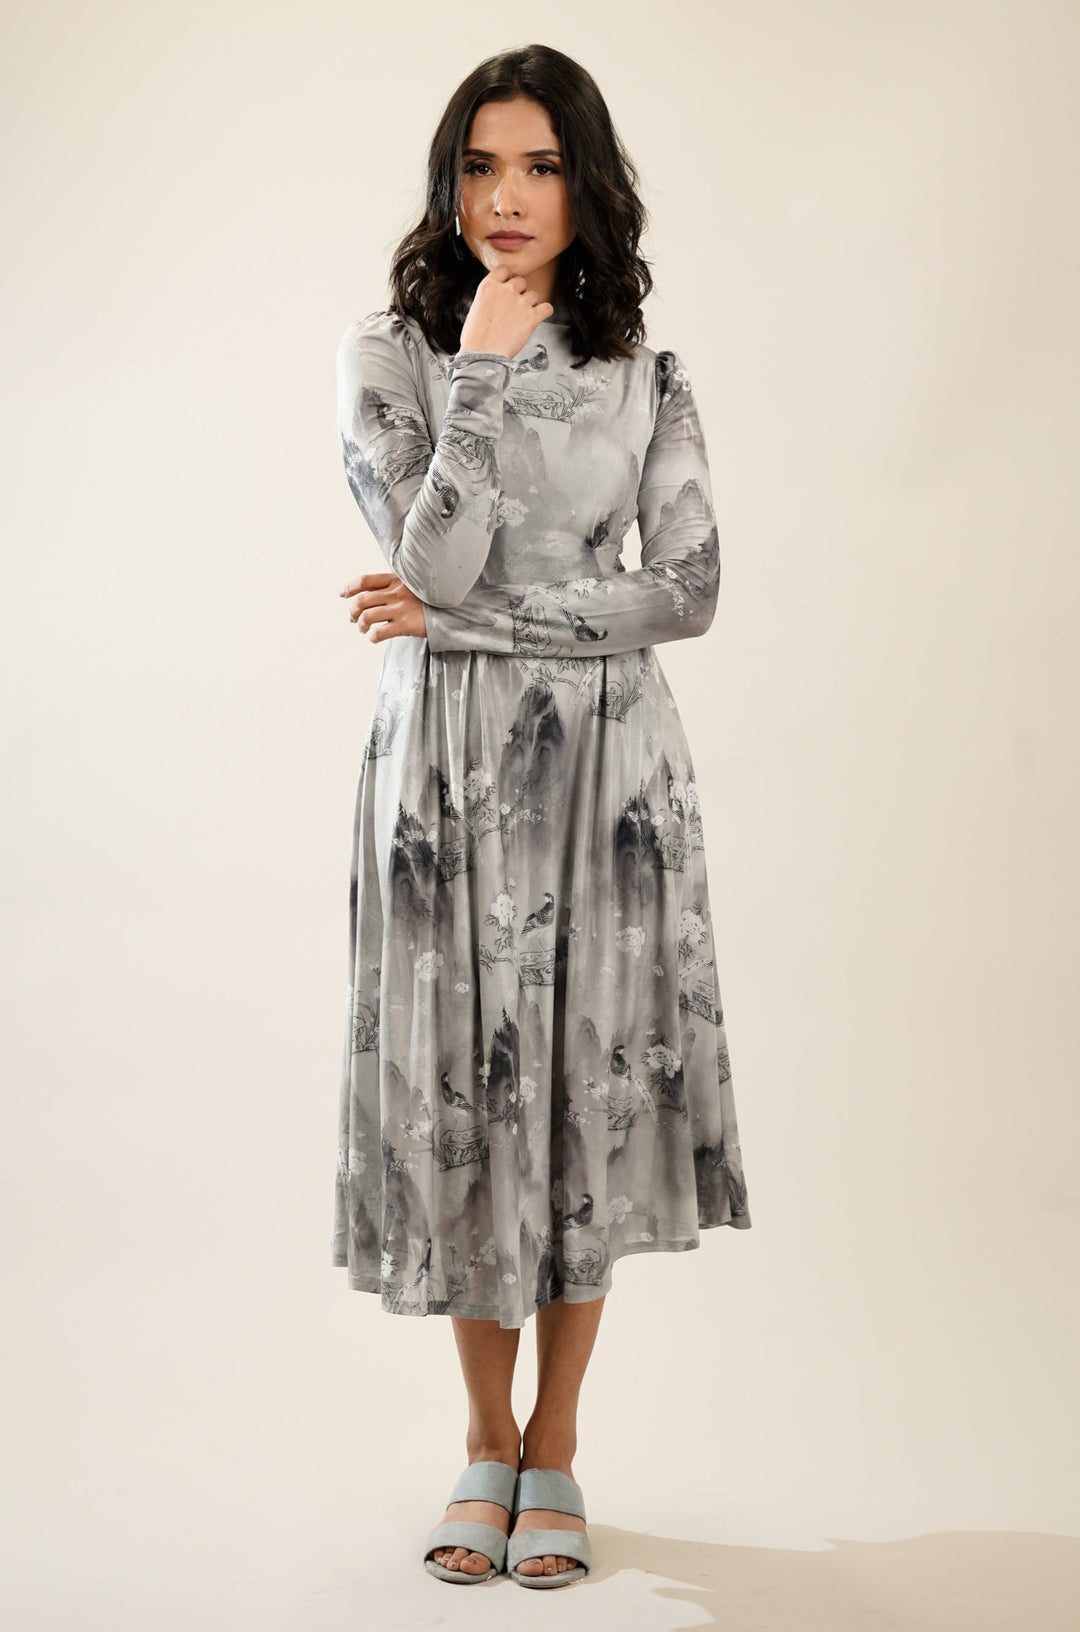 Stylish full length grey dress